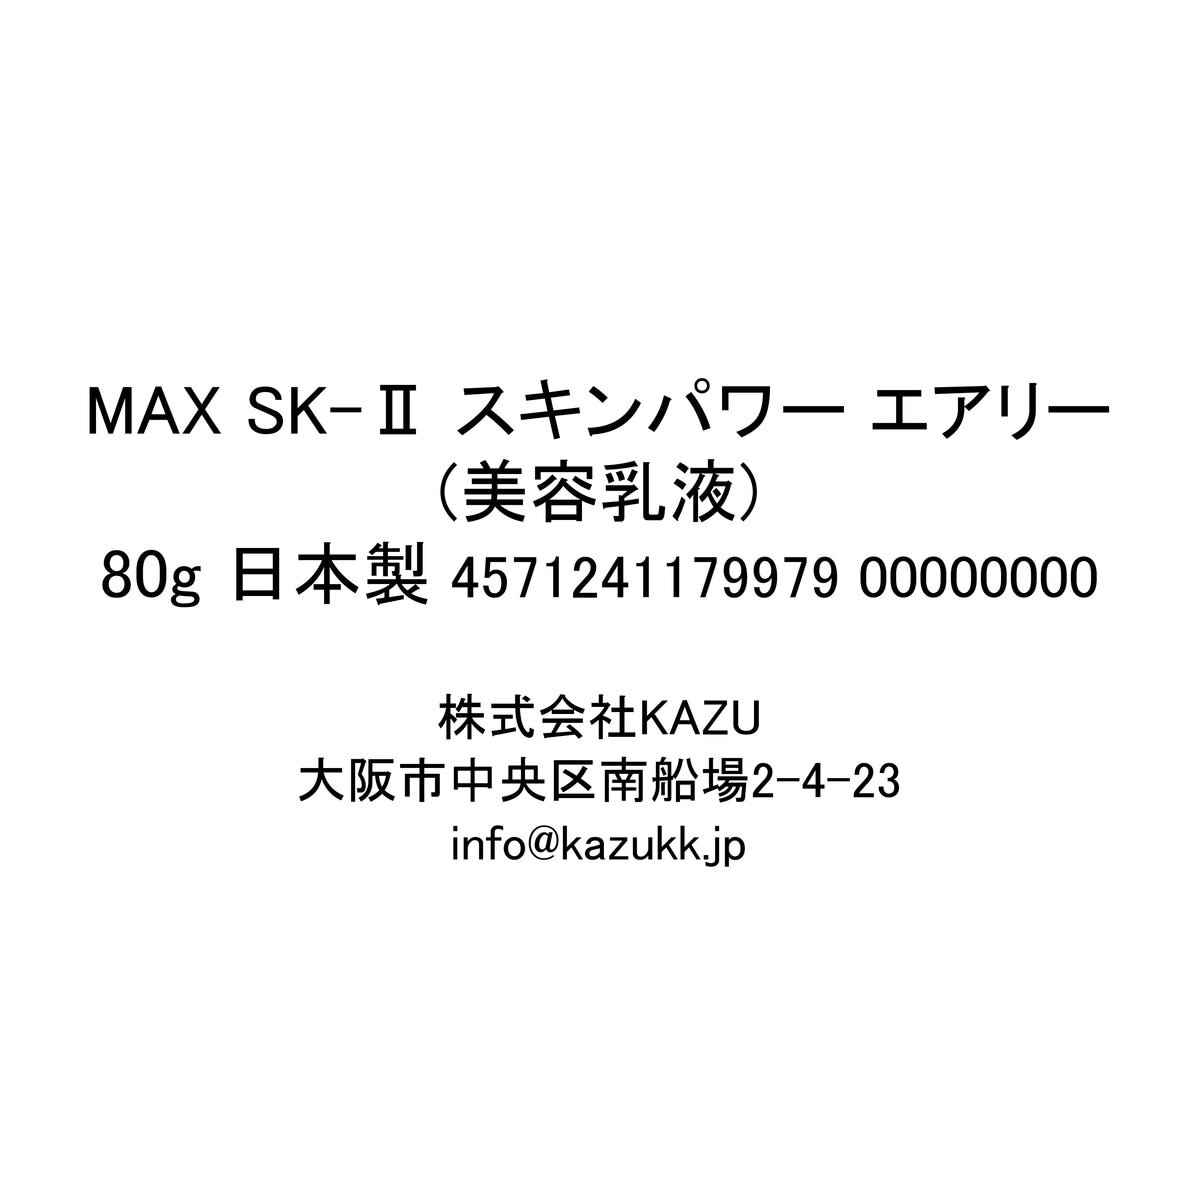 SK-II スキンパワー エアリー 80g | Costco Japan